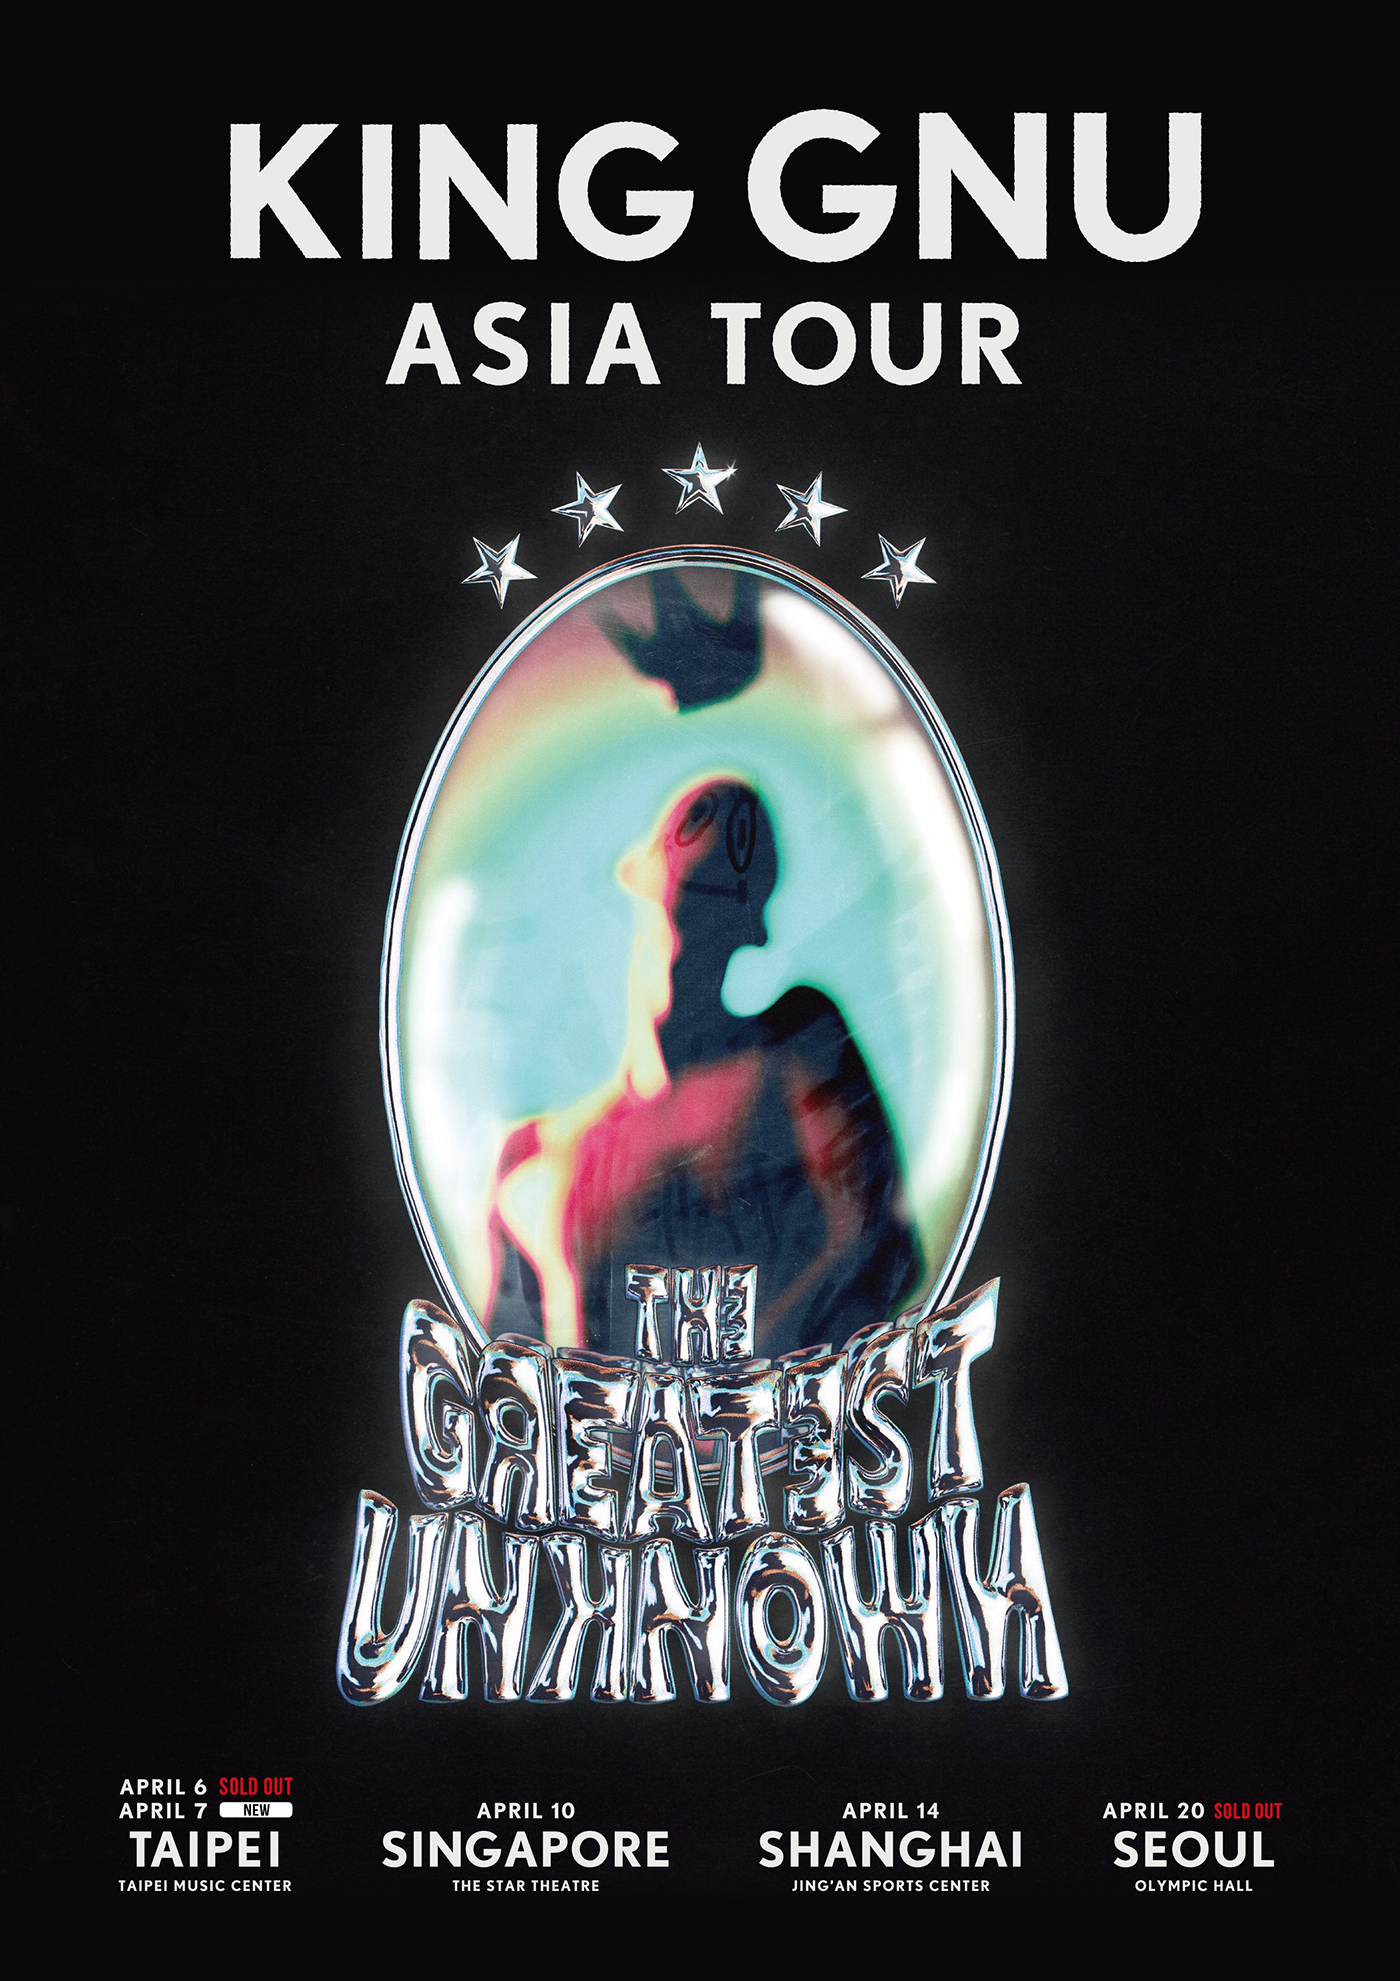 King Gnuアジアツアー『THE GREATEST UNKNOWN』台北、ソウル公演のチケットが発売と同時に完売！ 台北では急きょ追加公演が決定 - 画像一覧（2/3）